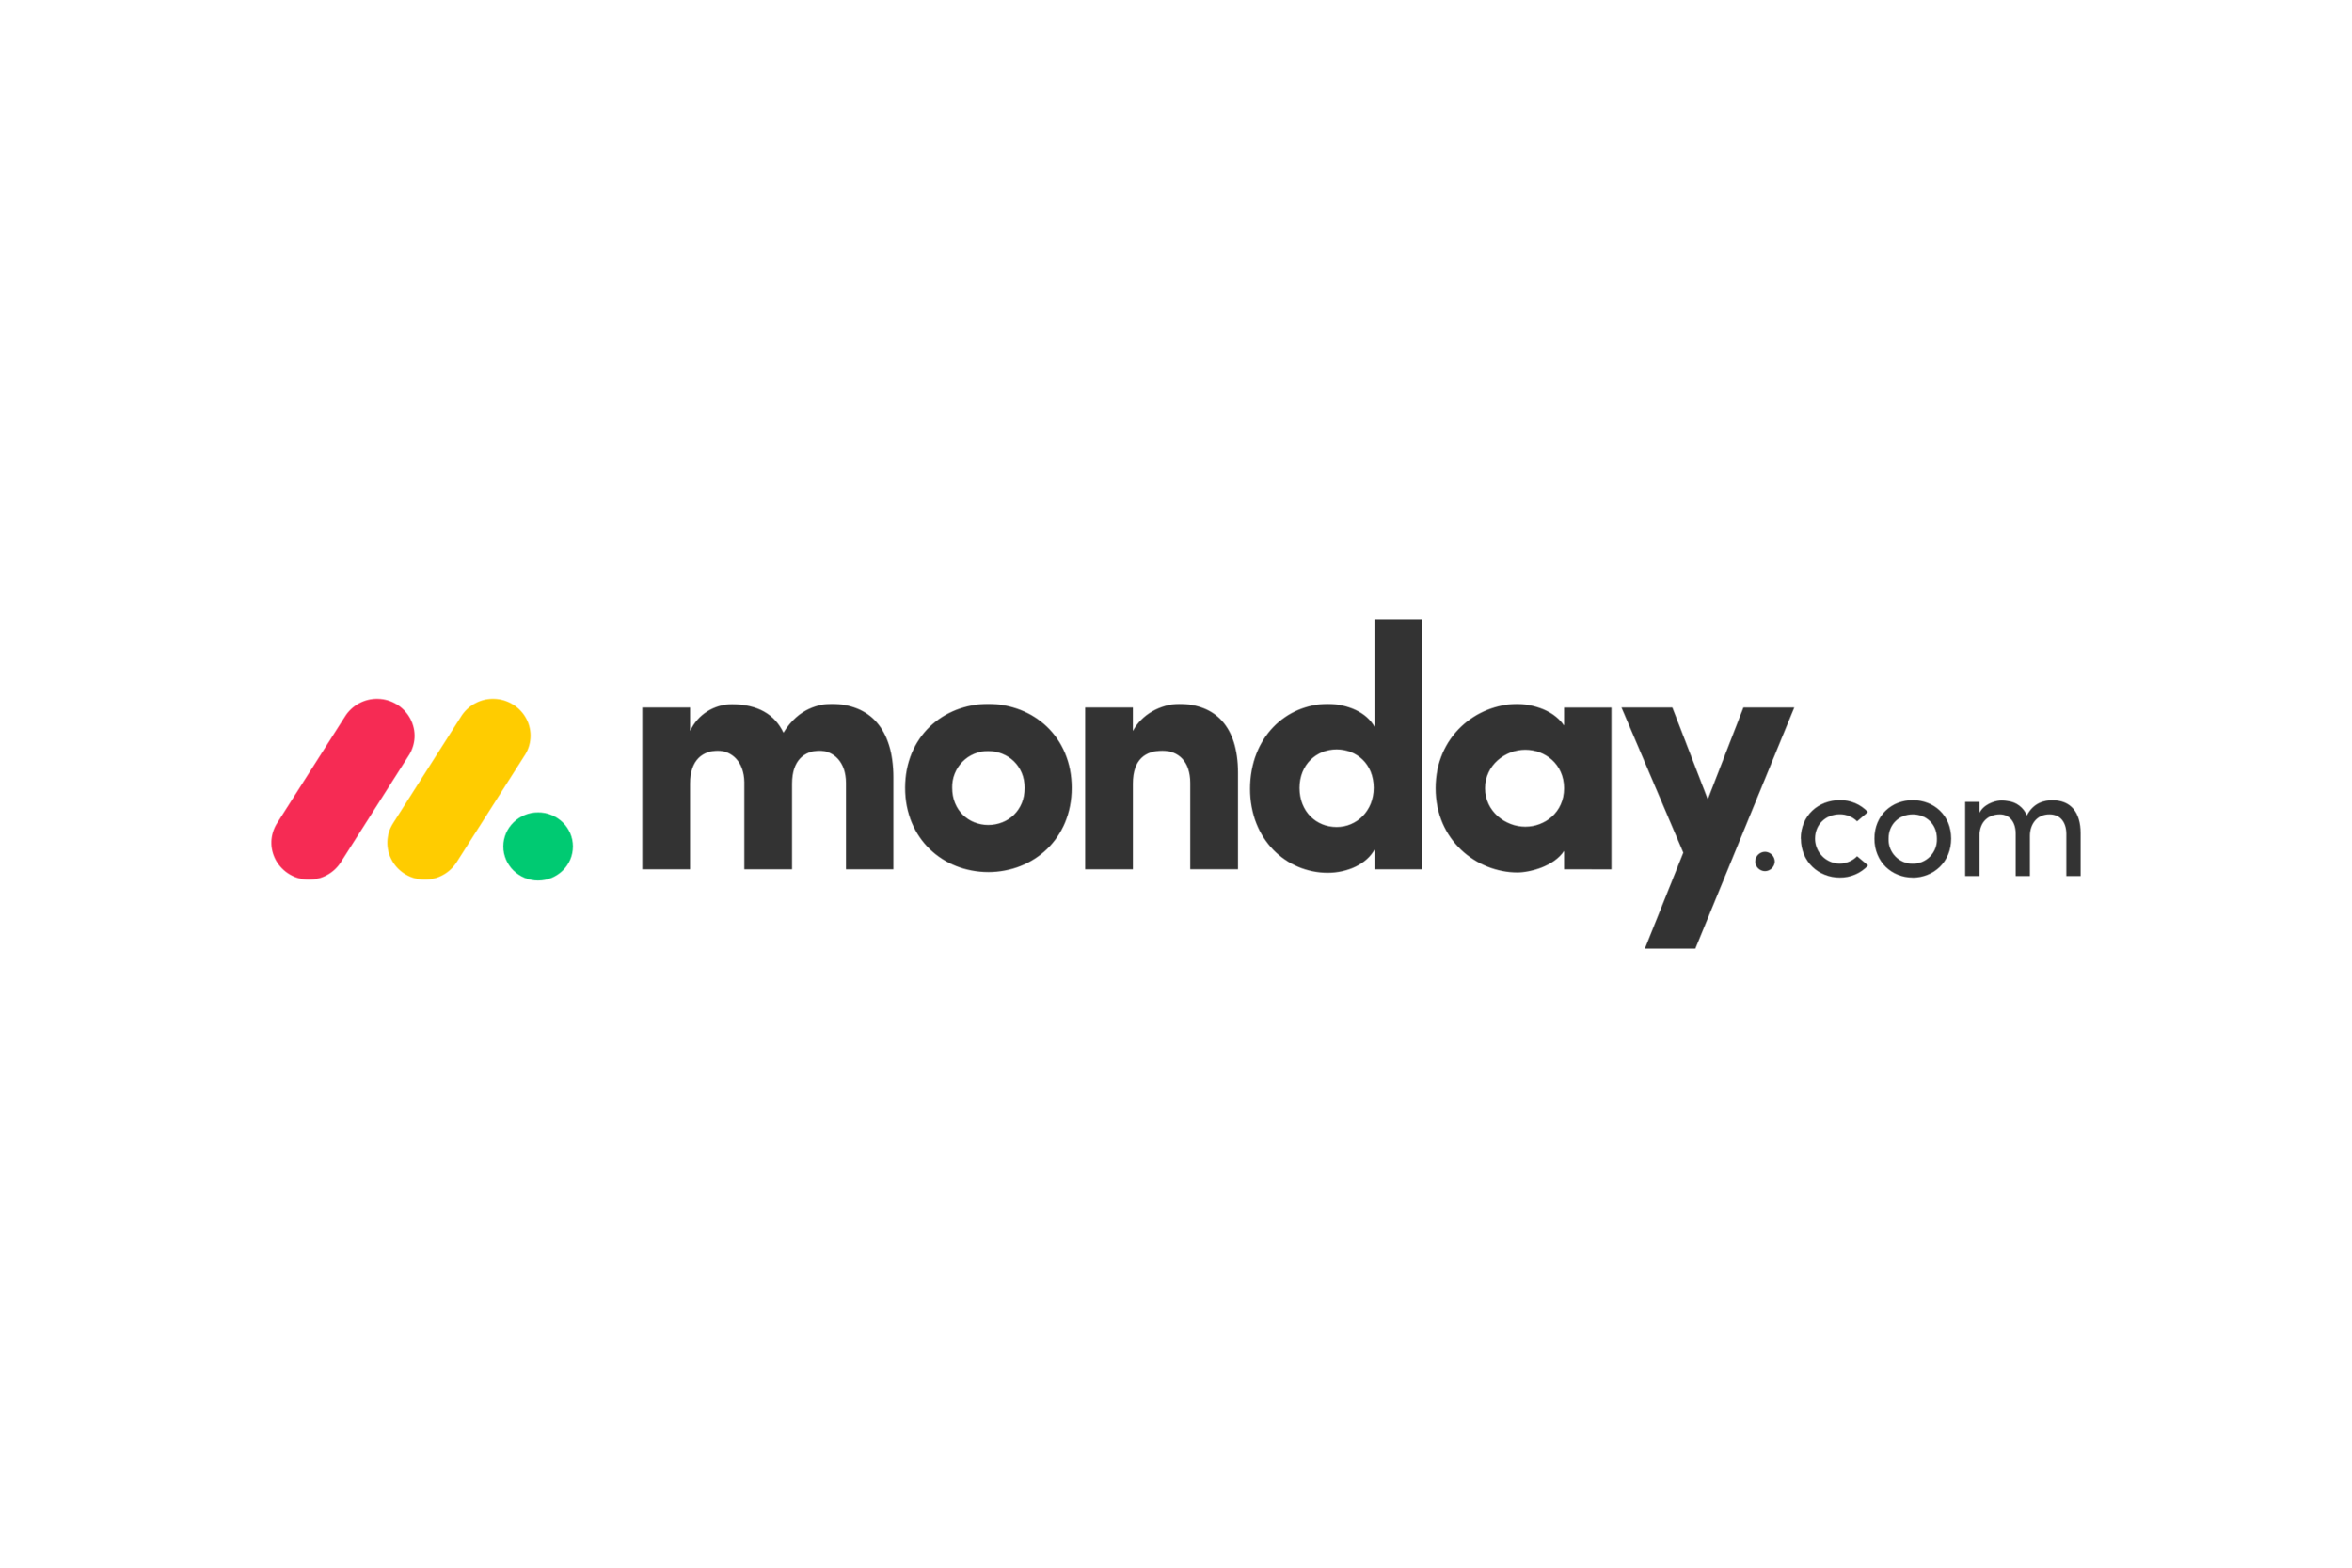 Monday.com-Logo.wine.png